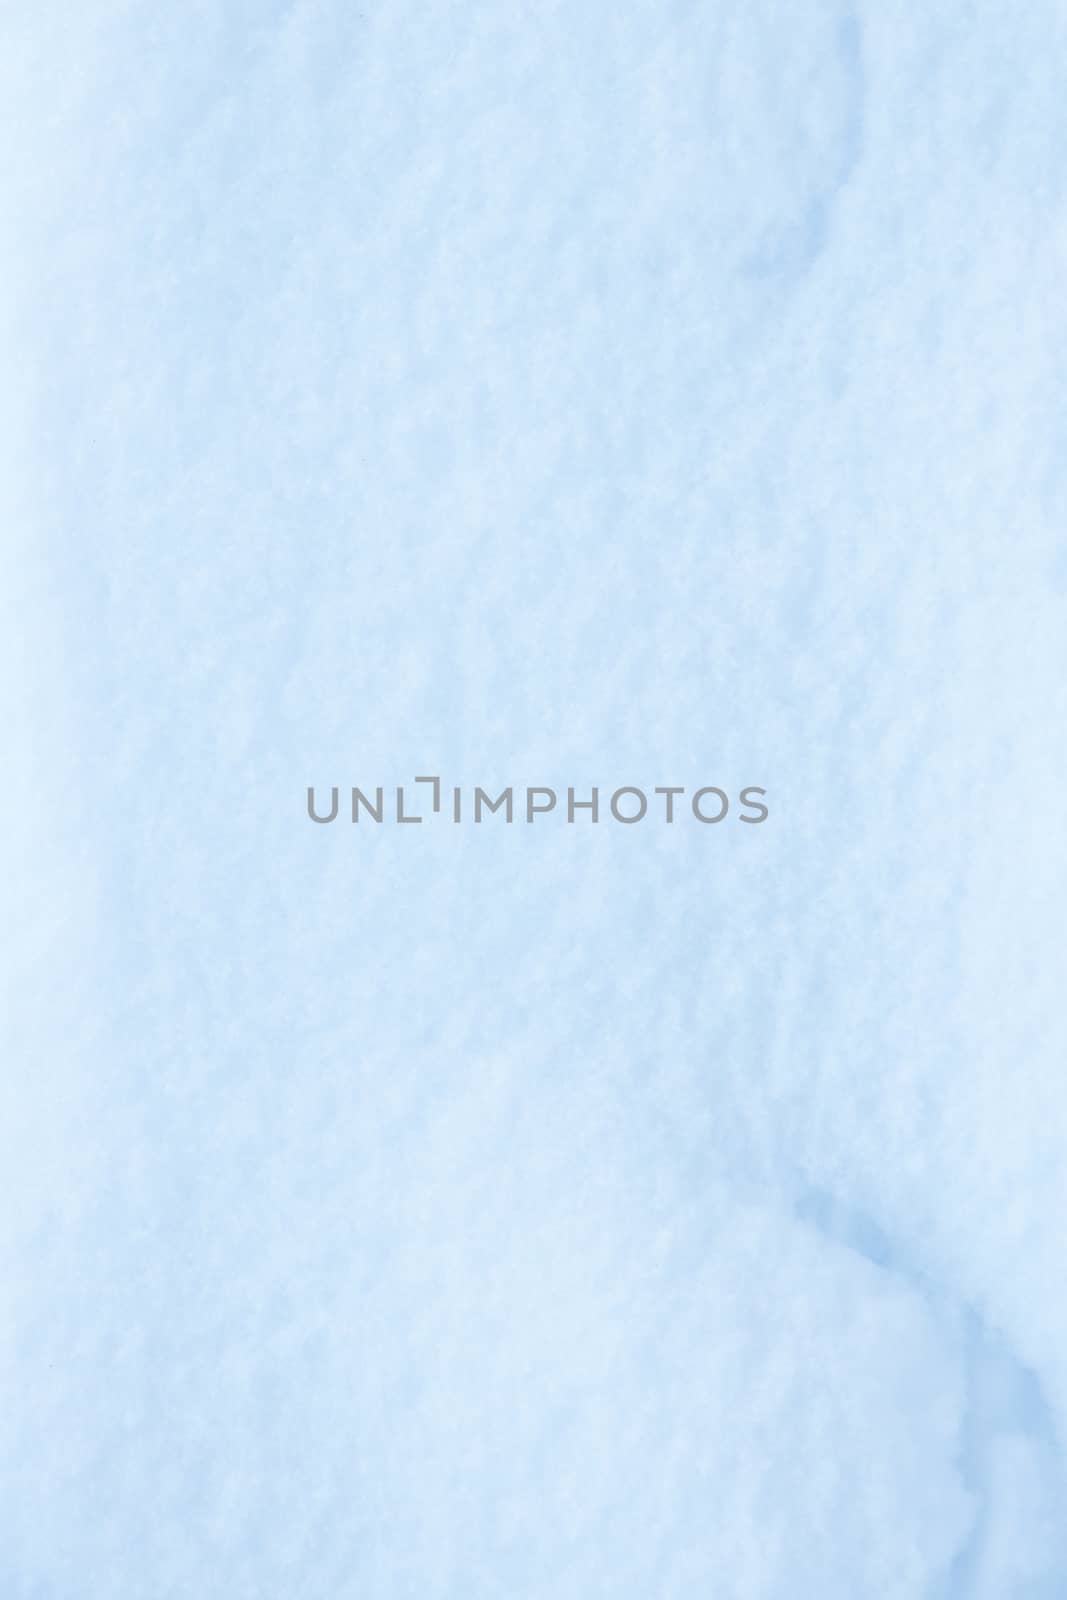 Soft snow hills surface. Snowy mound texture. Winter snowdrift landscape background. by sanches812